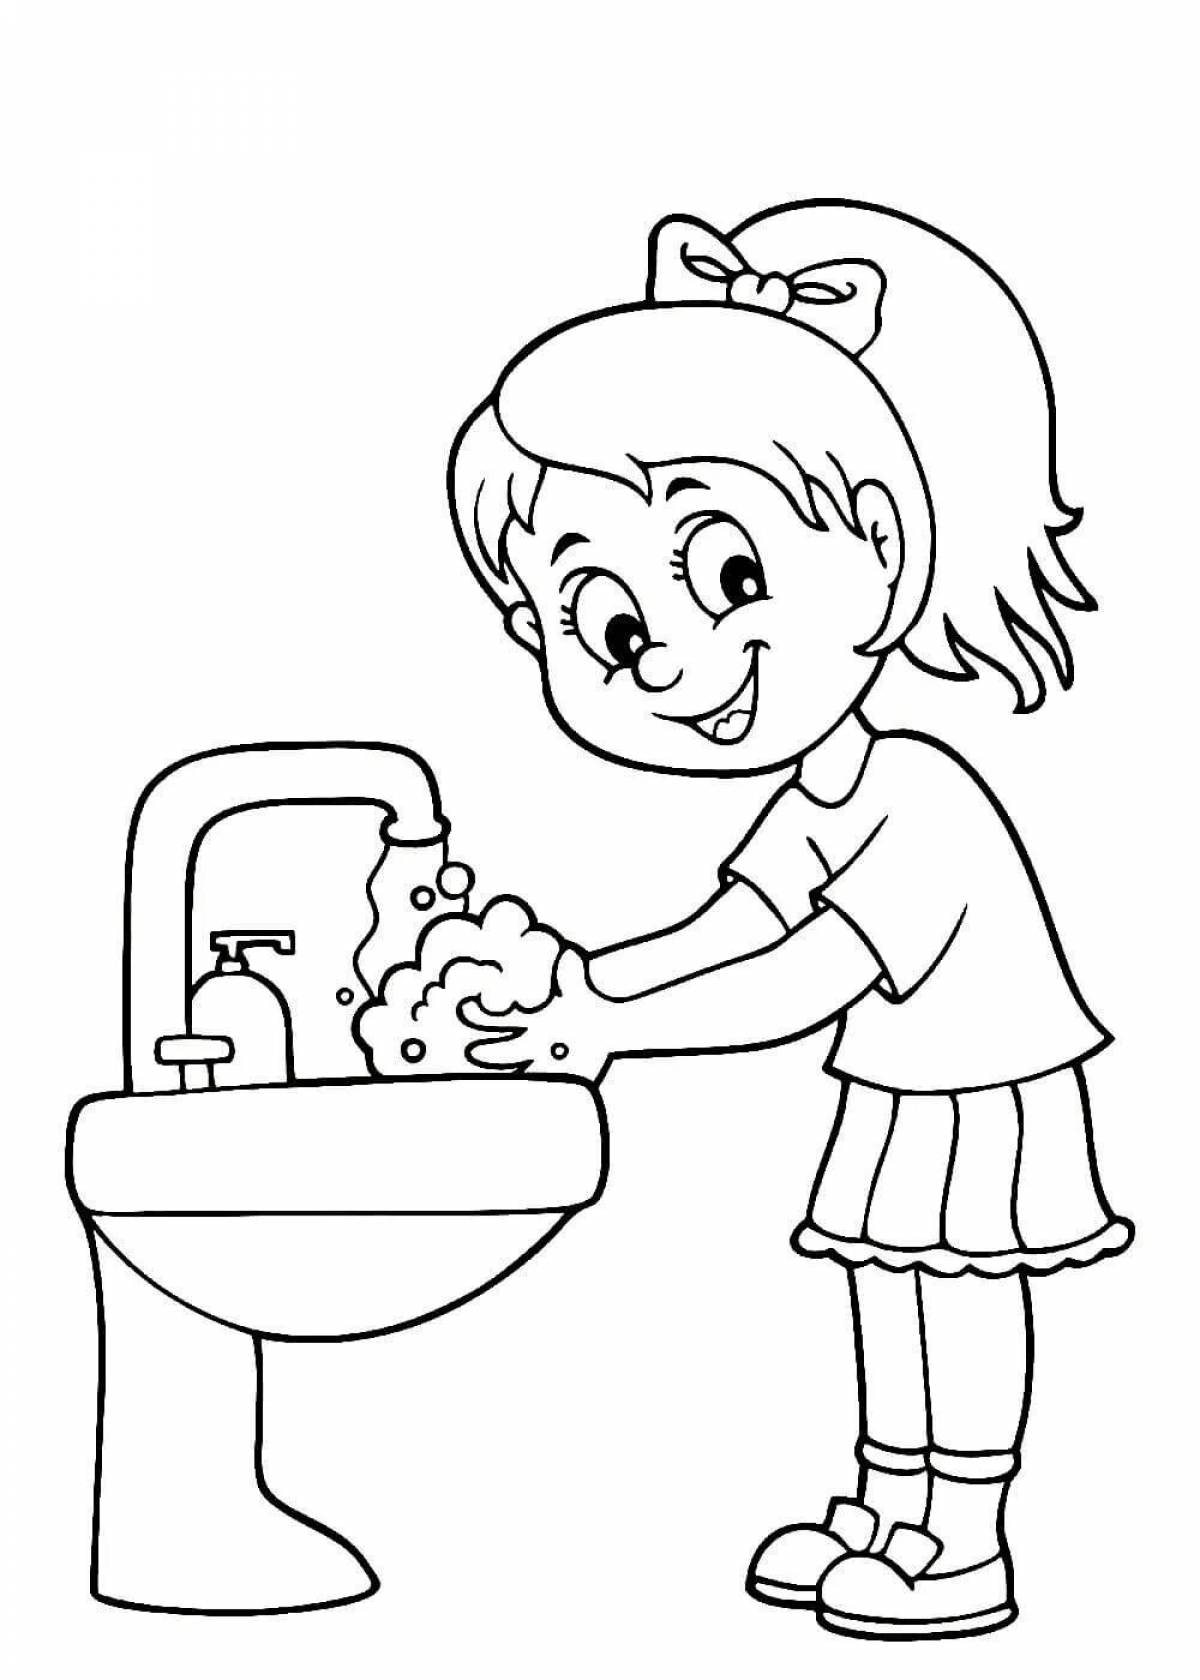 Hygiene for children #3